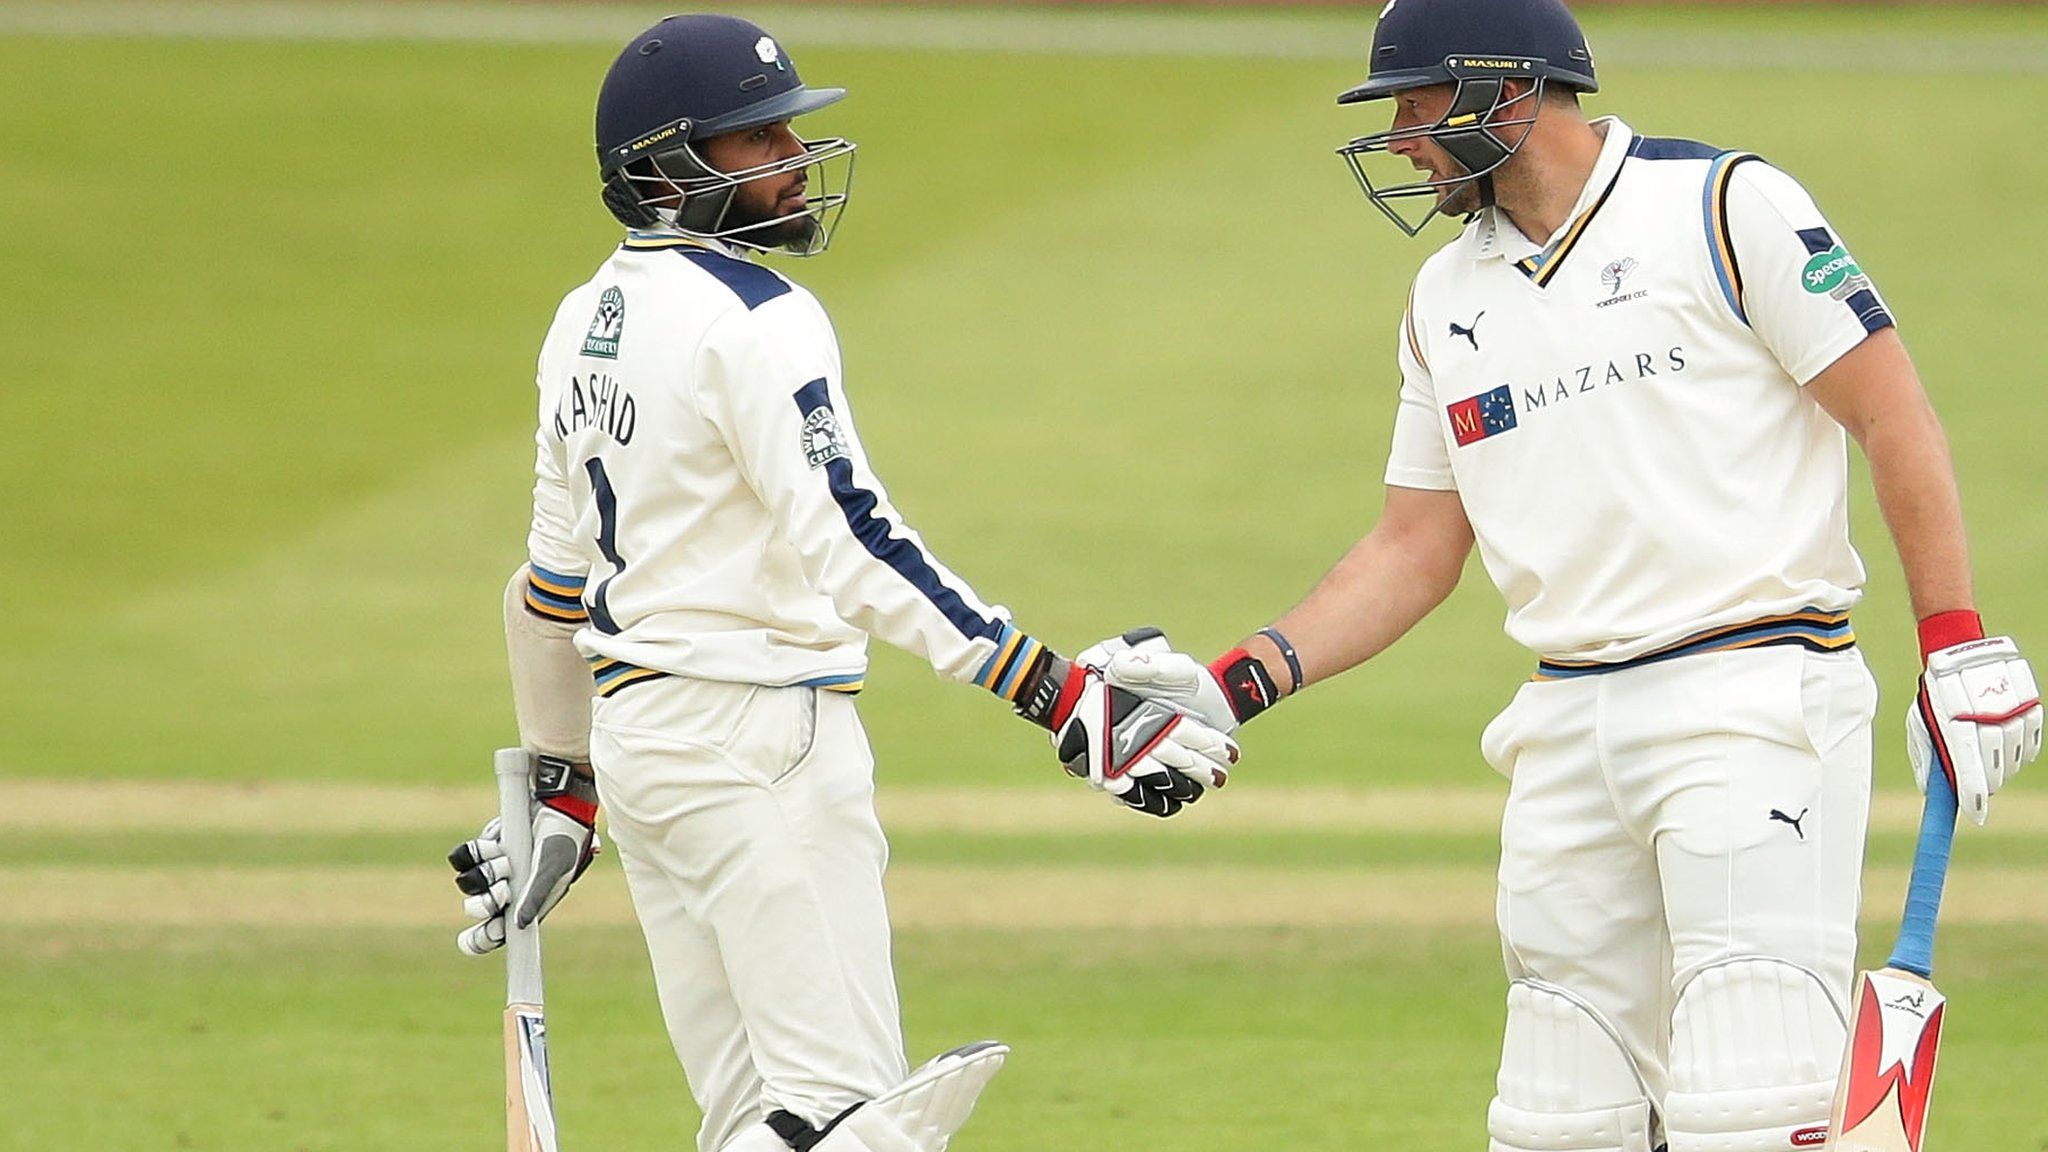 Yorkshire's sixth-wicket pair Adil Rashid and Tim Bresnan